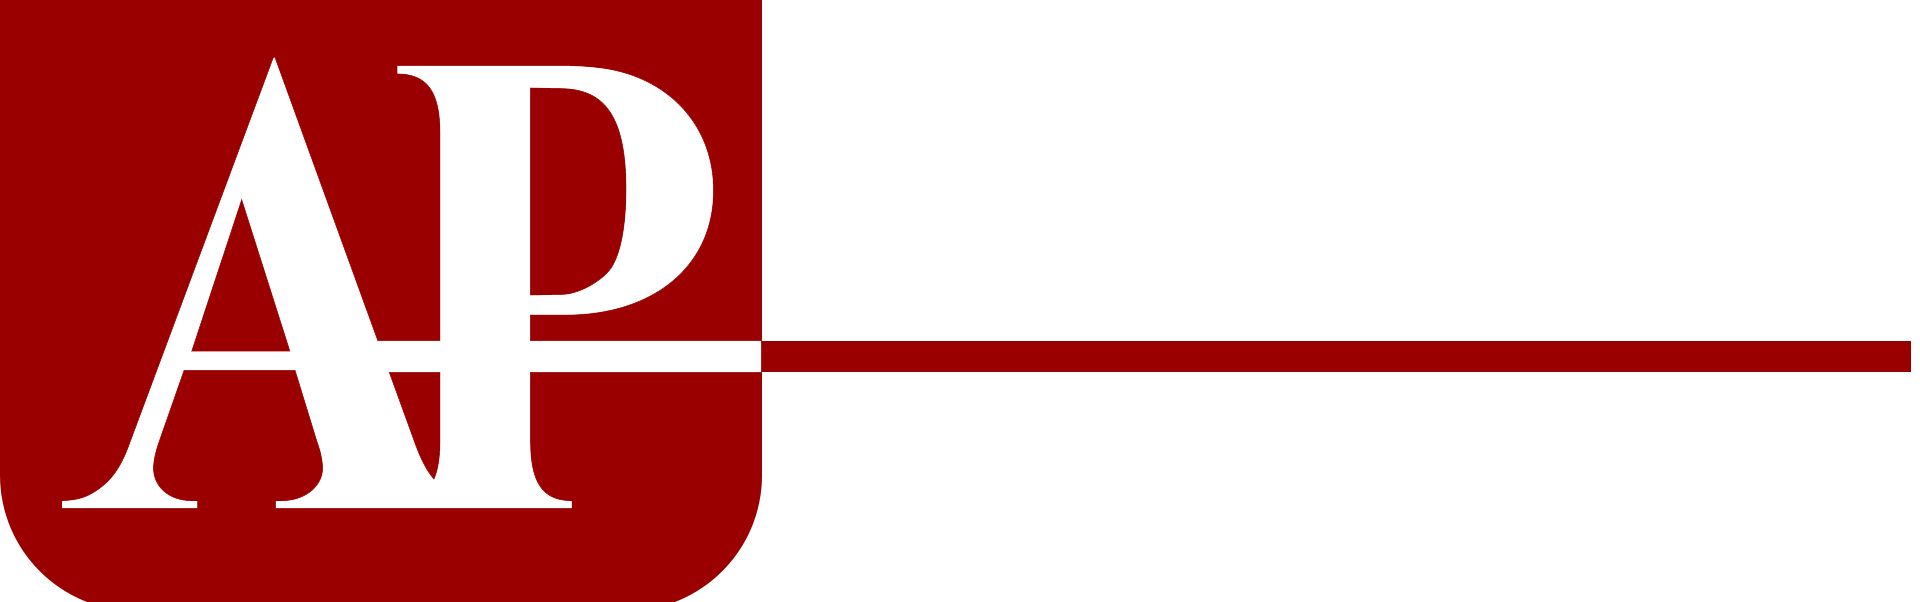 Aubrey Paton & Associates Accountants logo